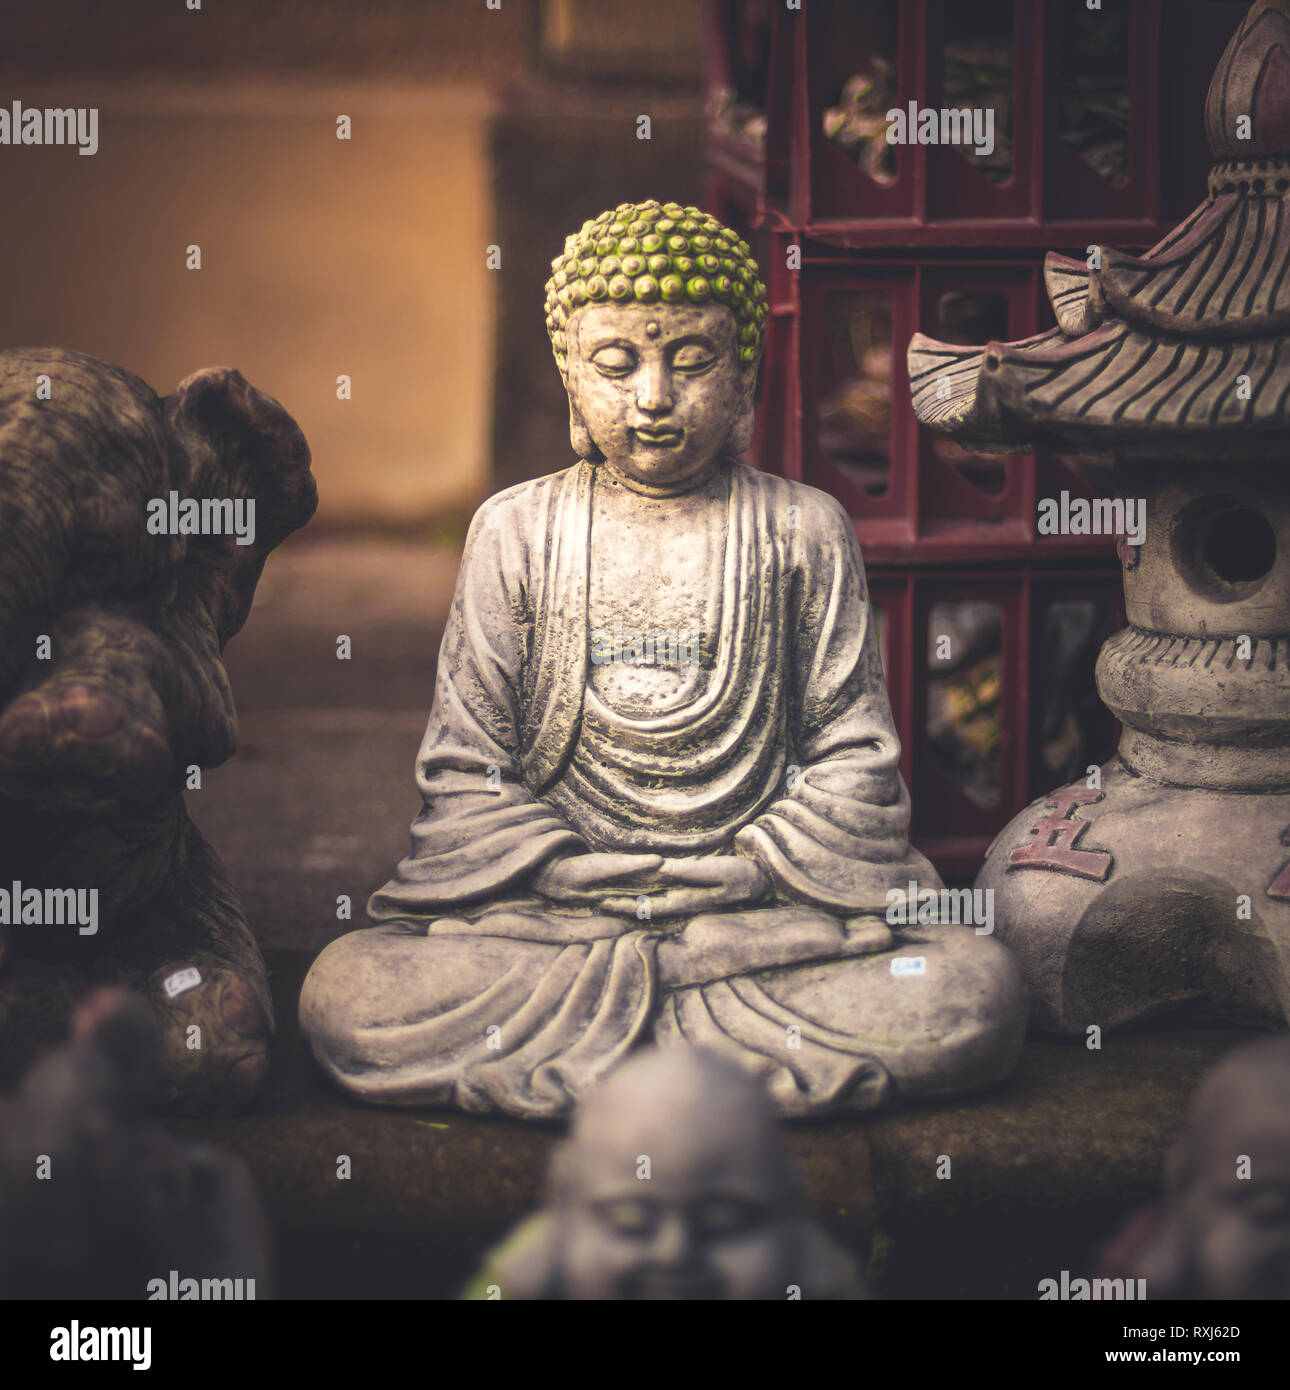 A small little Buddha statue hidden away in a market Stock Photo - Alamy